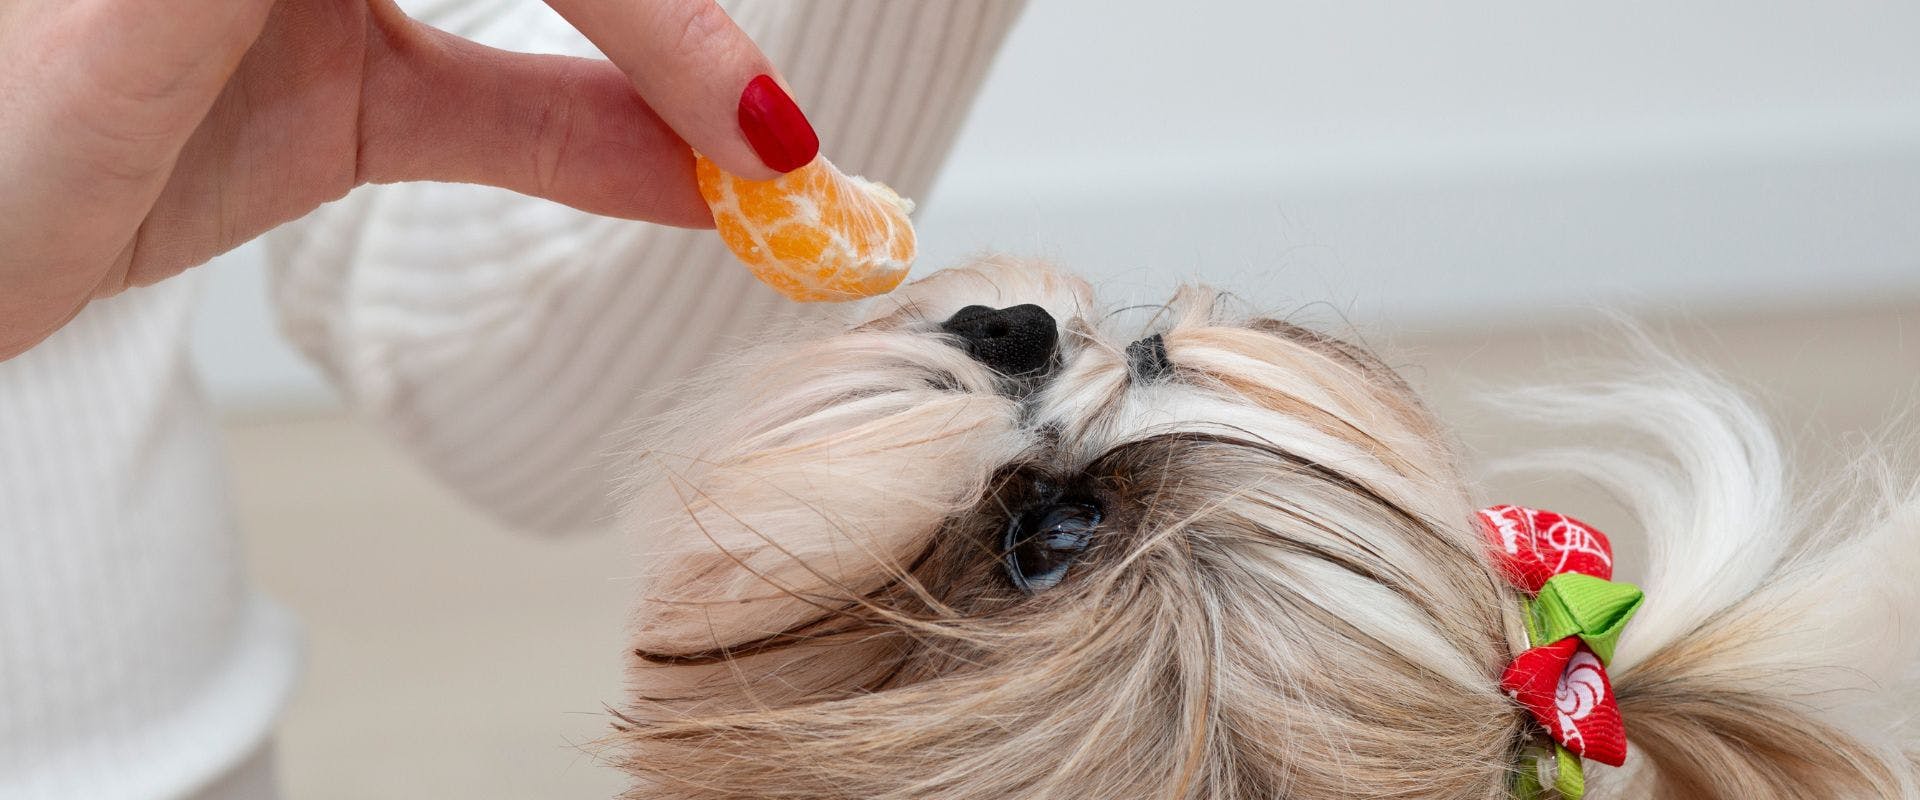 Small dog eating orange segments